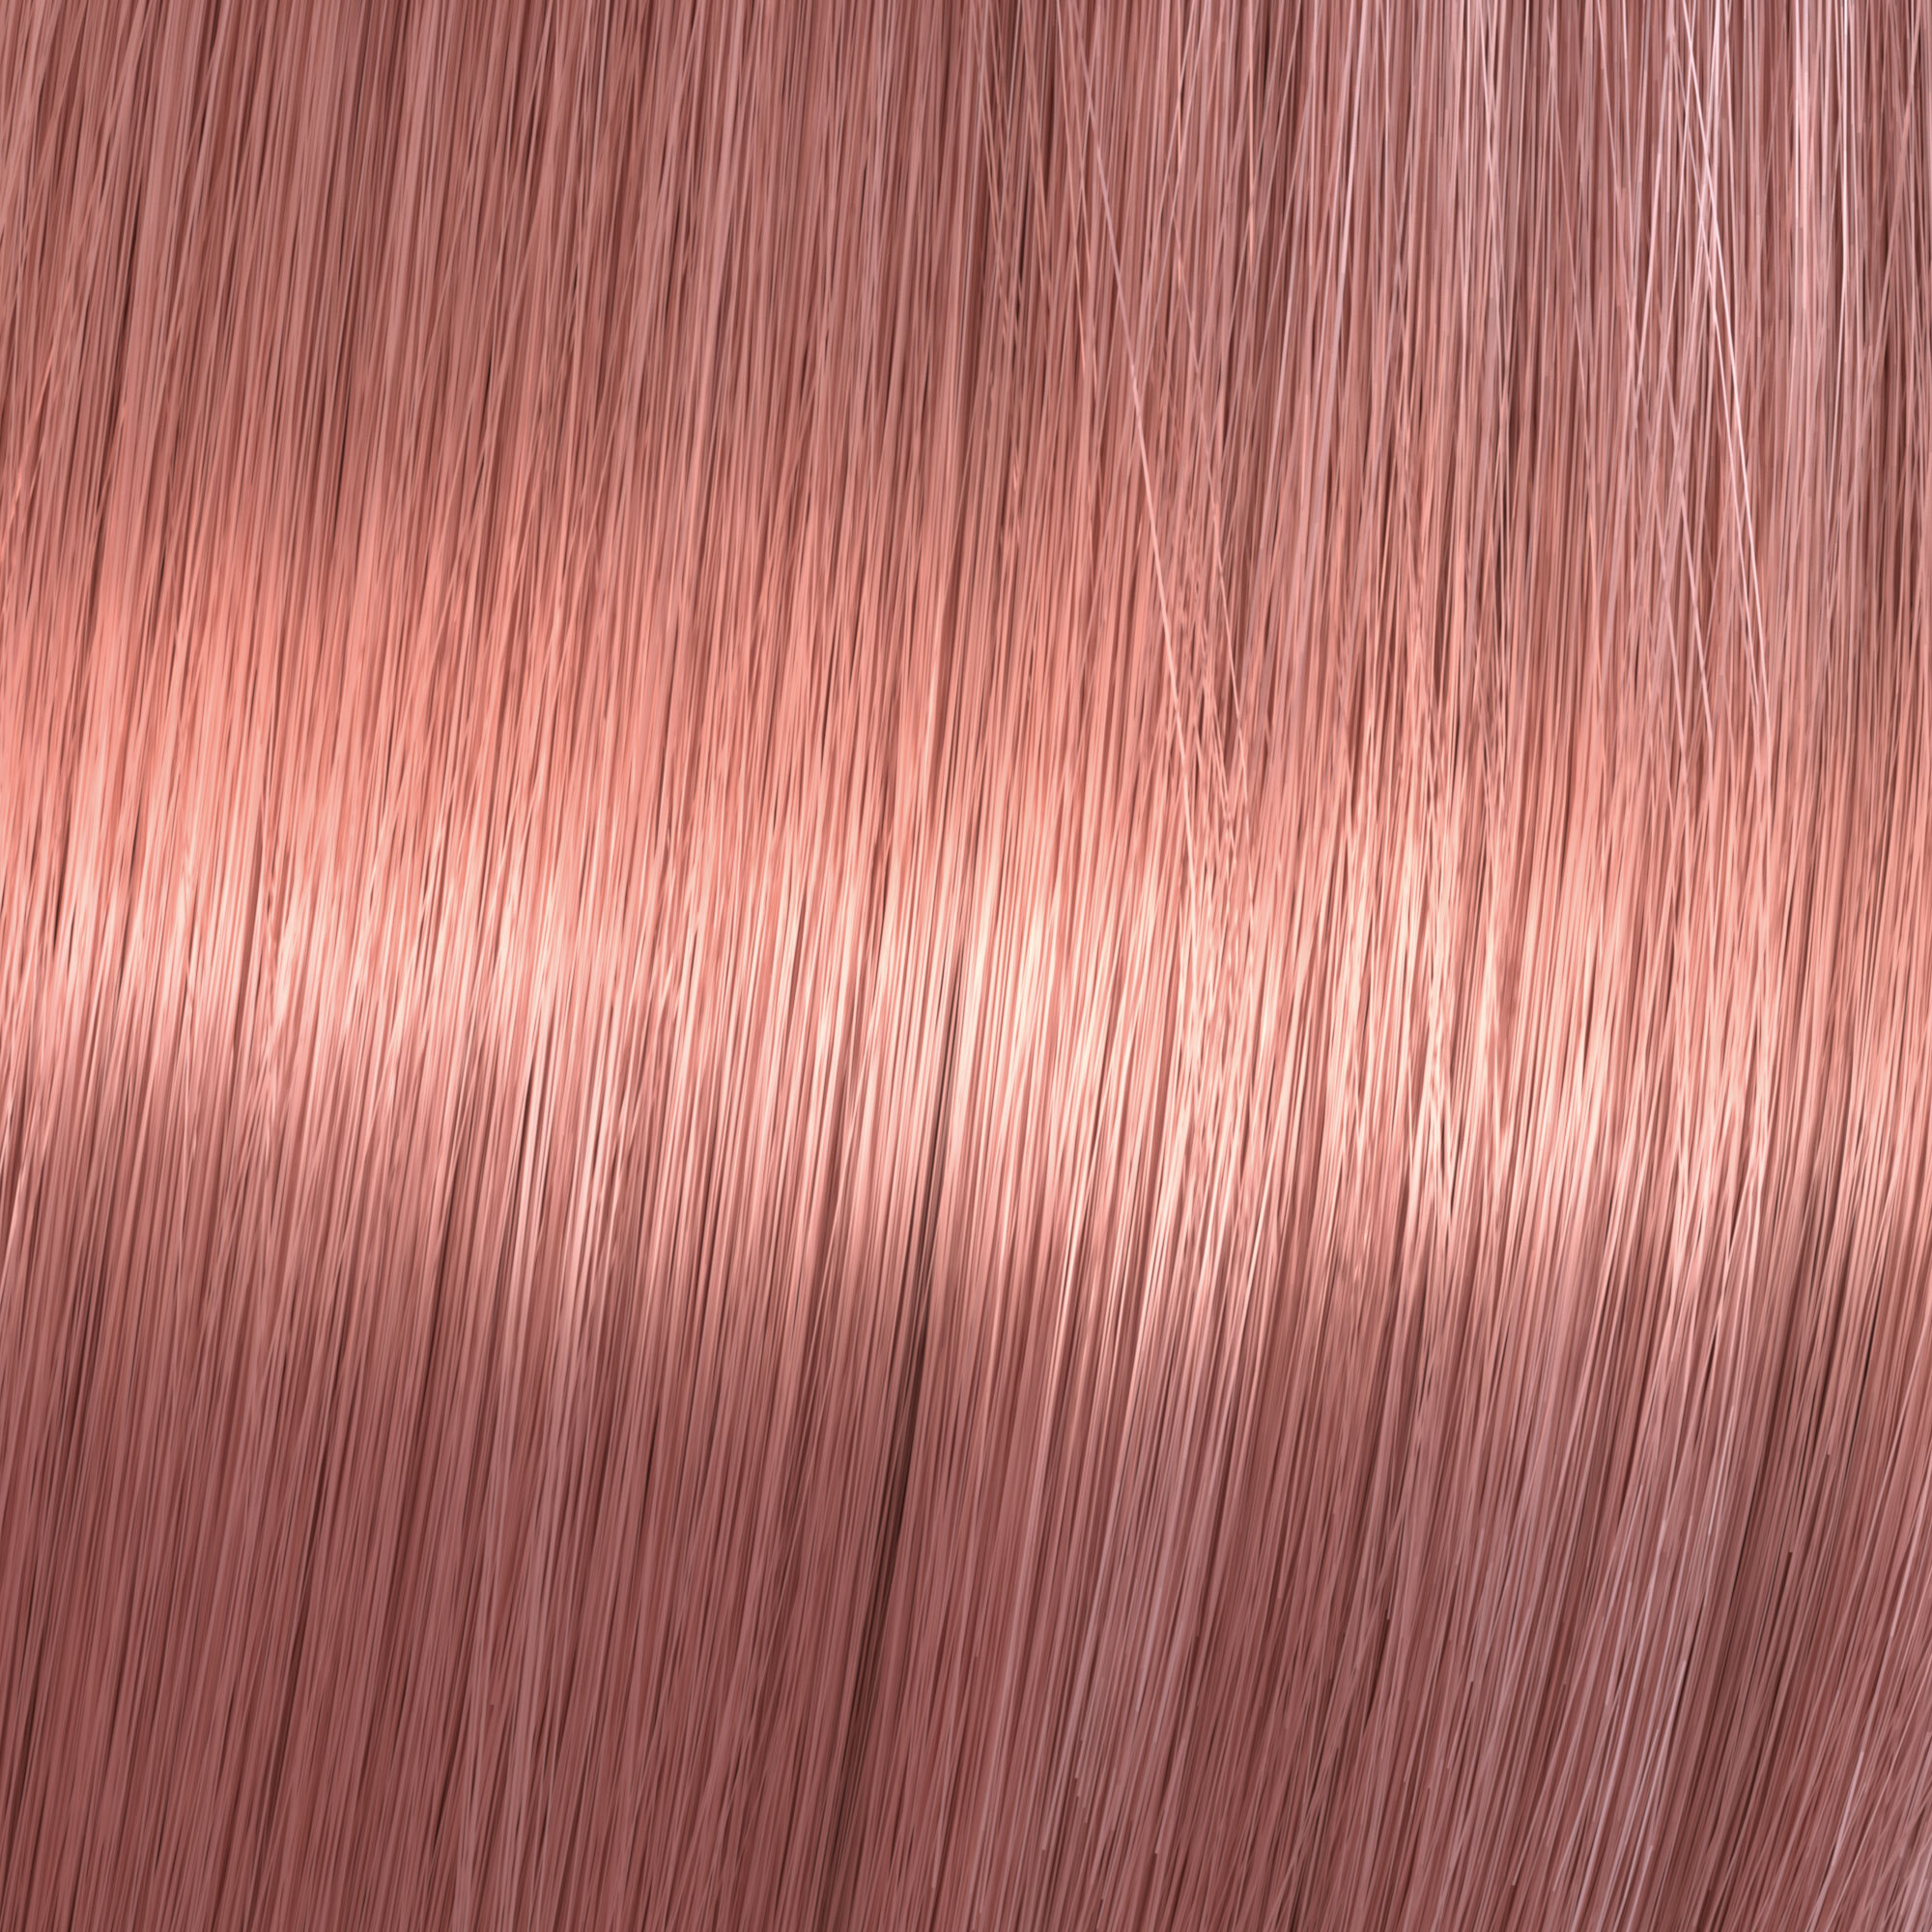 Wella Shinefinity Color Glaze - 07/59 Medium Blonde Mahogany Cendre